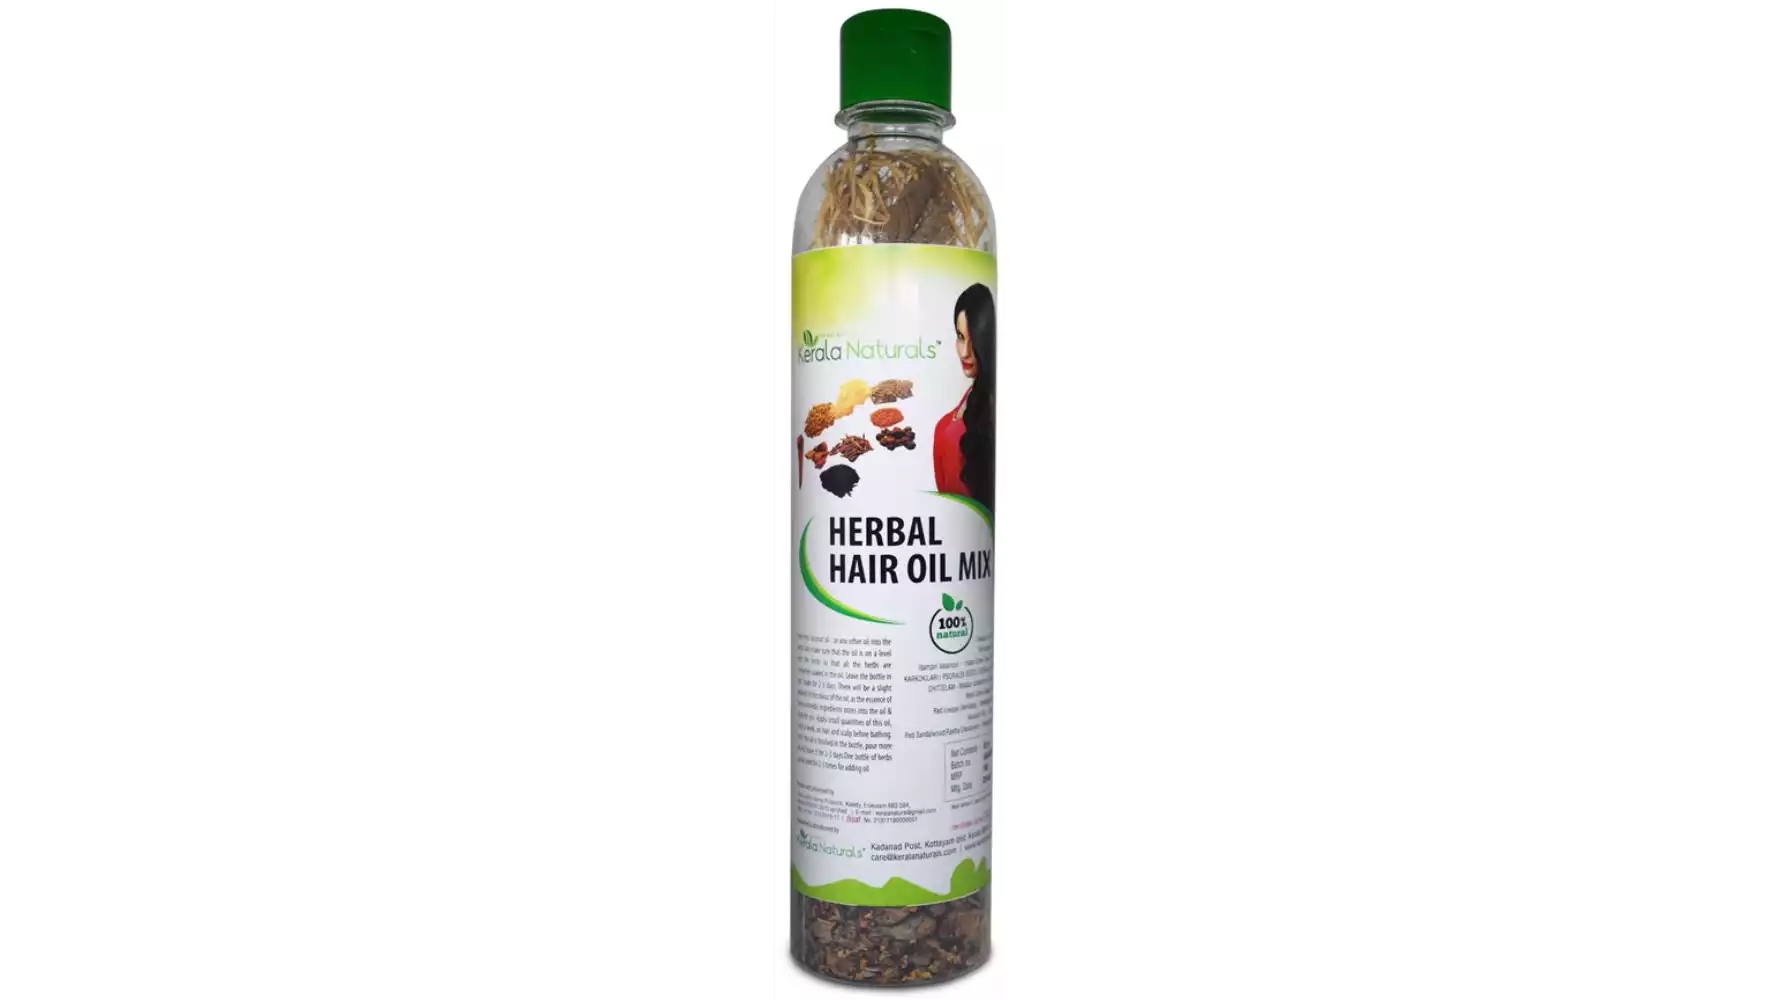 Kerala Naturals Herbal Hair Oil Mix (50g)